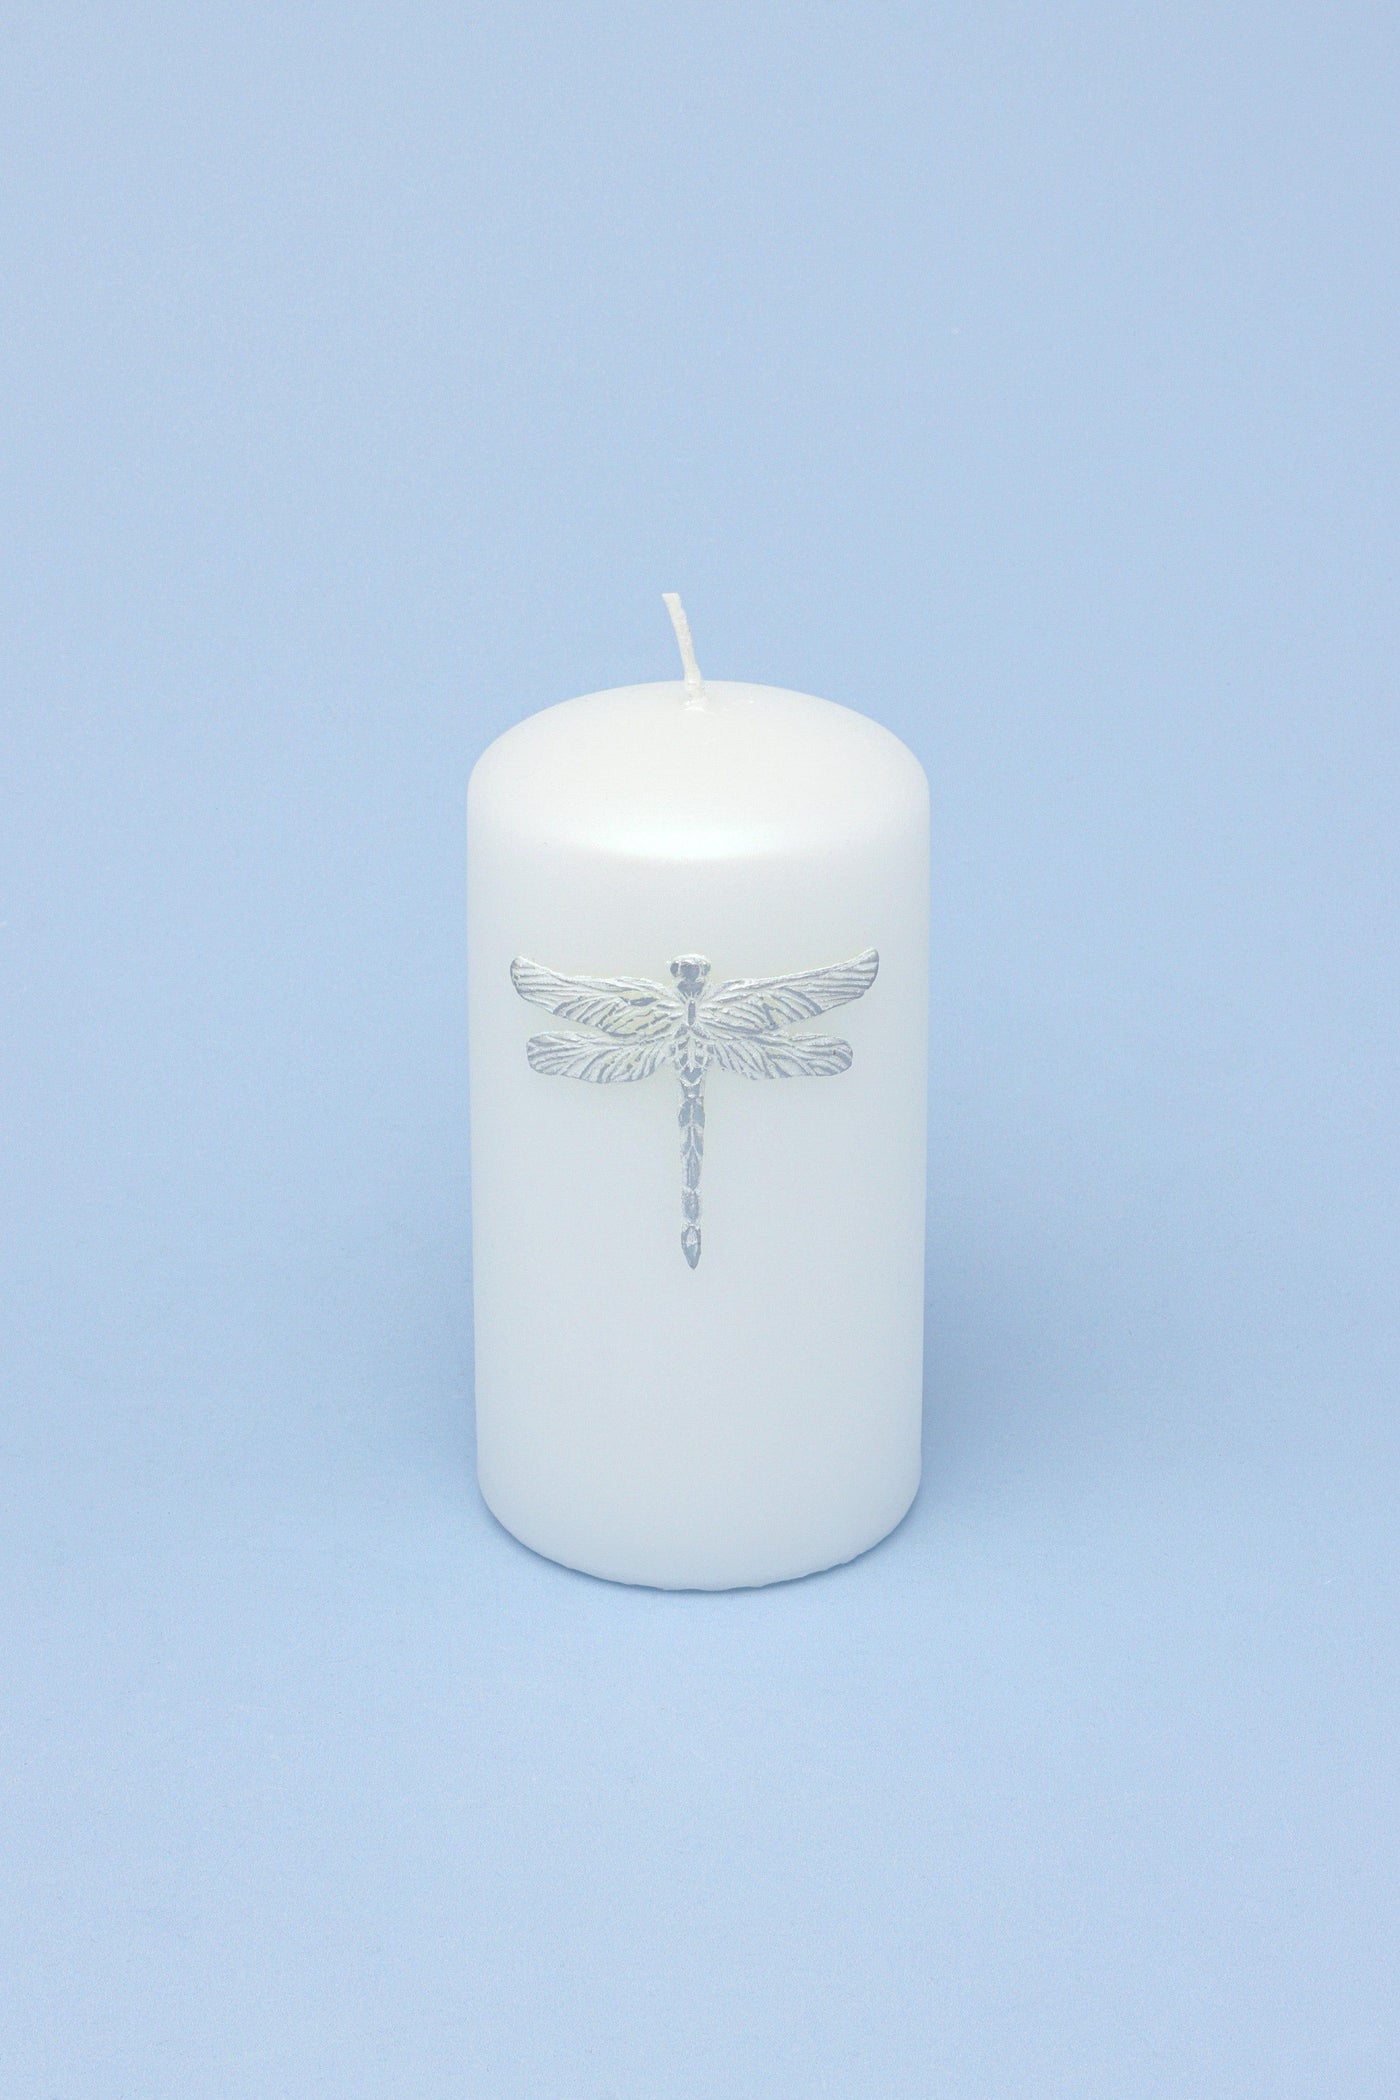 G Decor Candles White / Large Dragonfly Nature White Elegant Pillar Candle